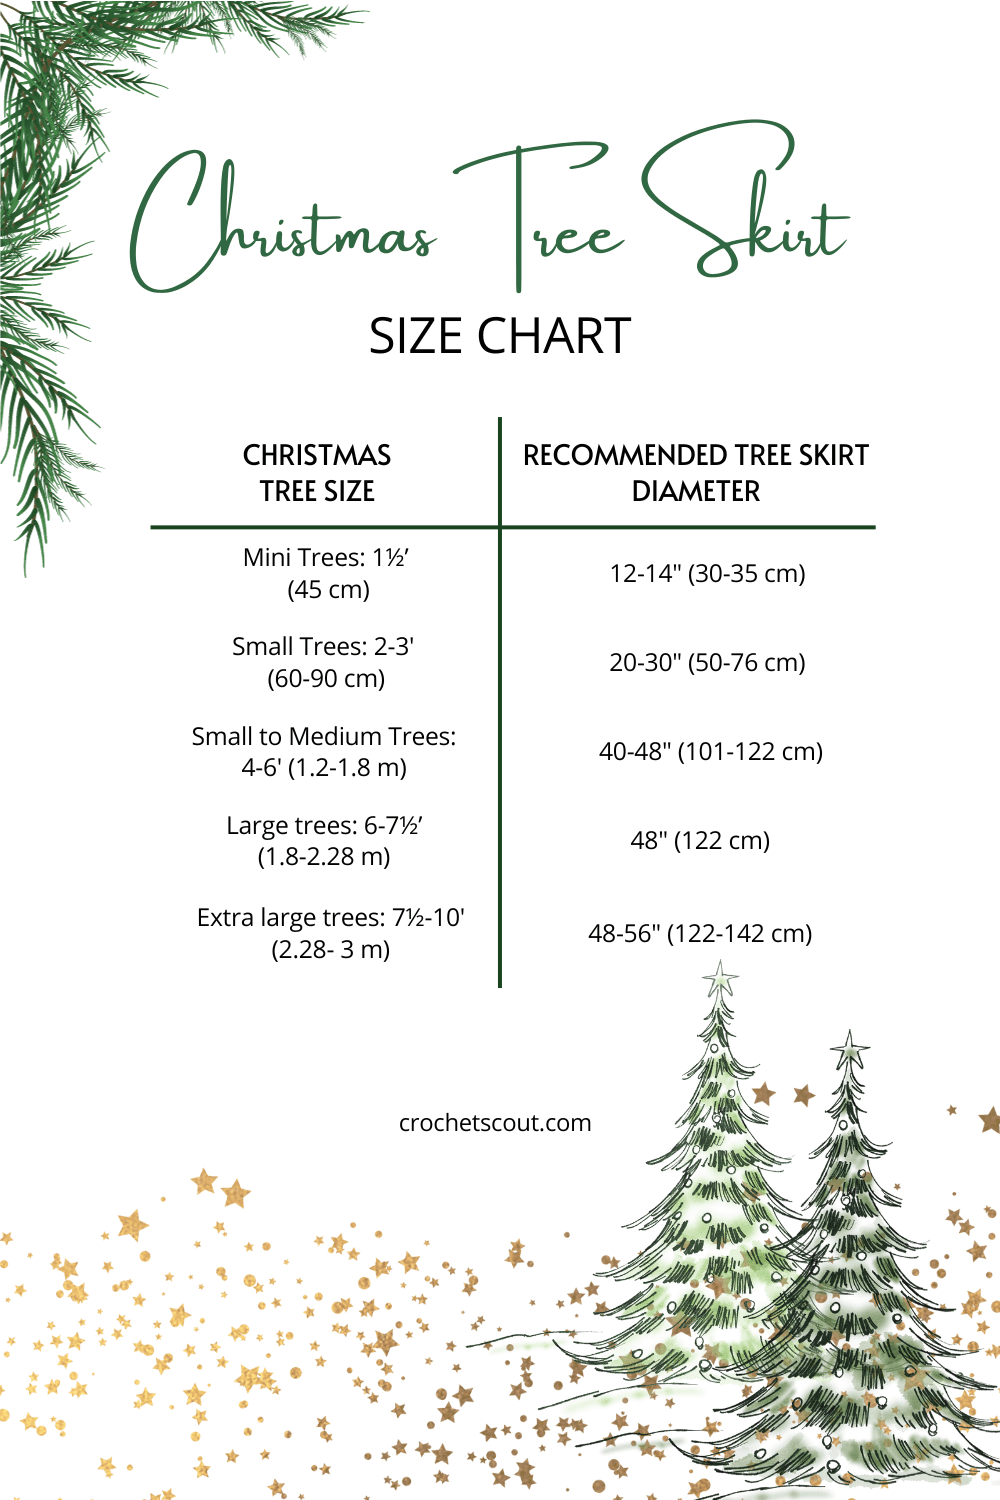 Christmas tree skirt size chart infographic.